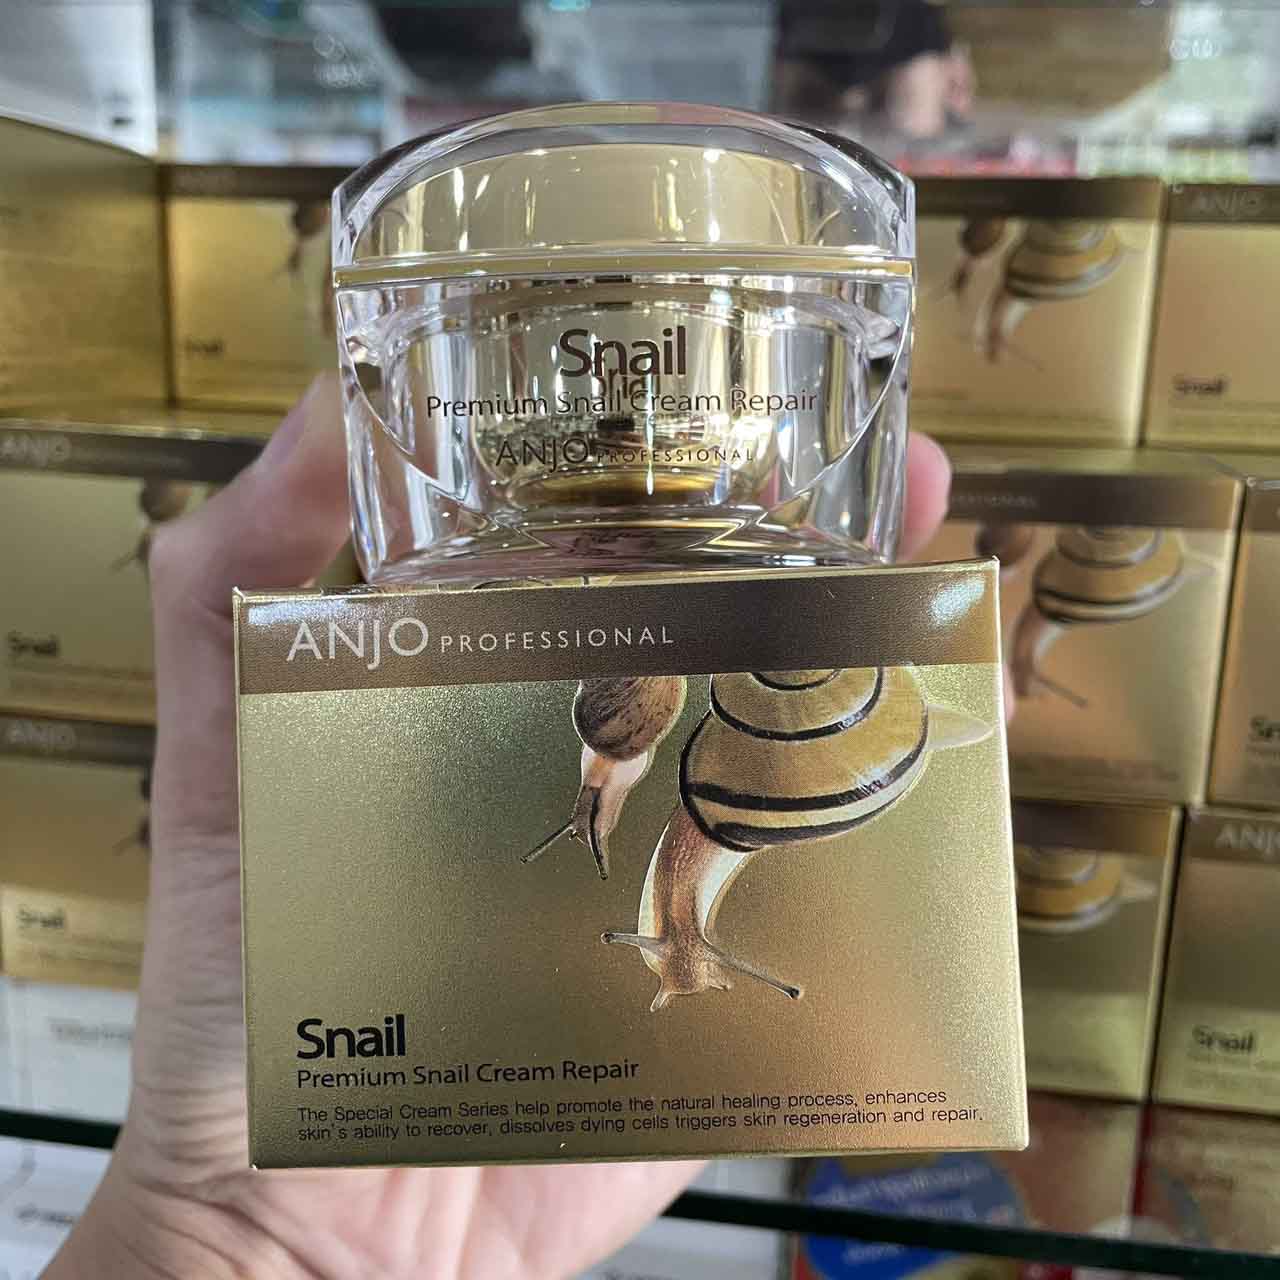 Anjo Professional Skin Premium Snail Cream Repair ขนาด 50 ml. ครีมหอยทากพรีเมียม ชื่อดังจากเกาหลี ของแท้ 100%